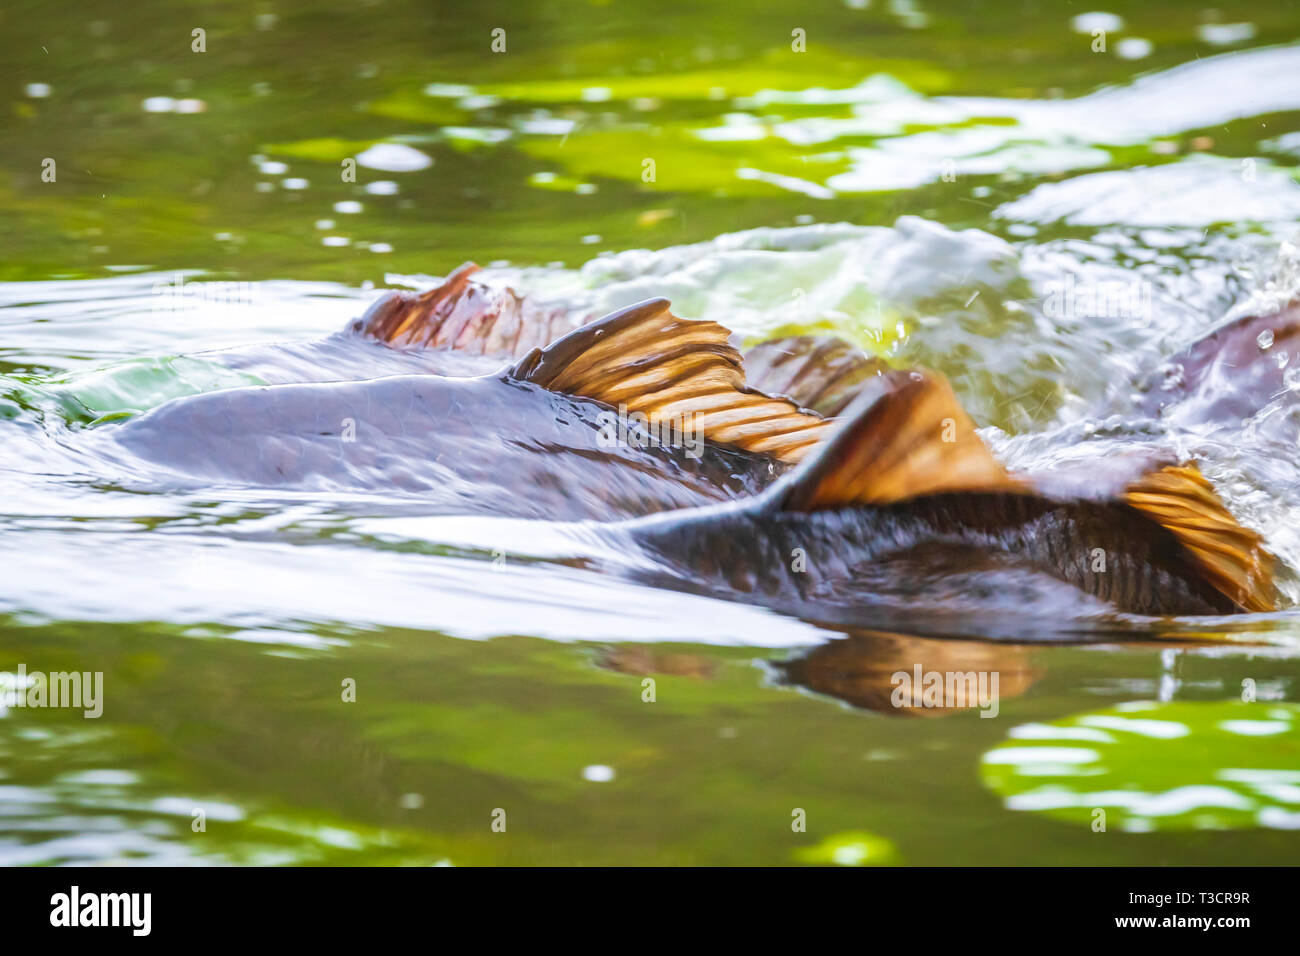 Common European carp (Cyprinus carpio) spawning violent during Springtime breeding season. Males pushing female to release their eggs and fertilize th Stock Photo